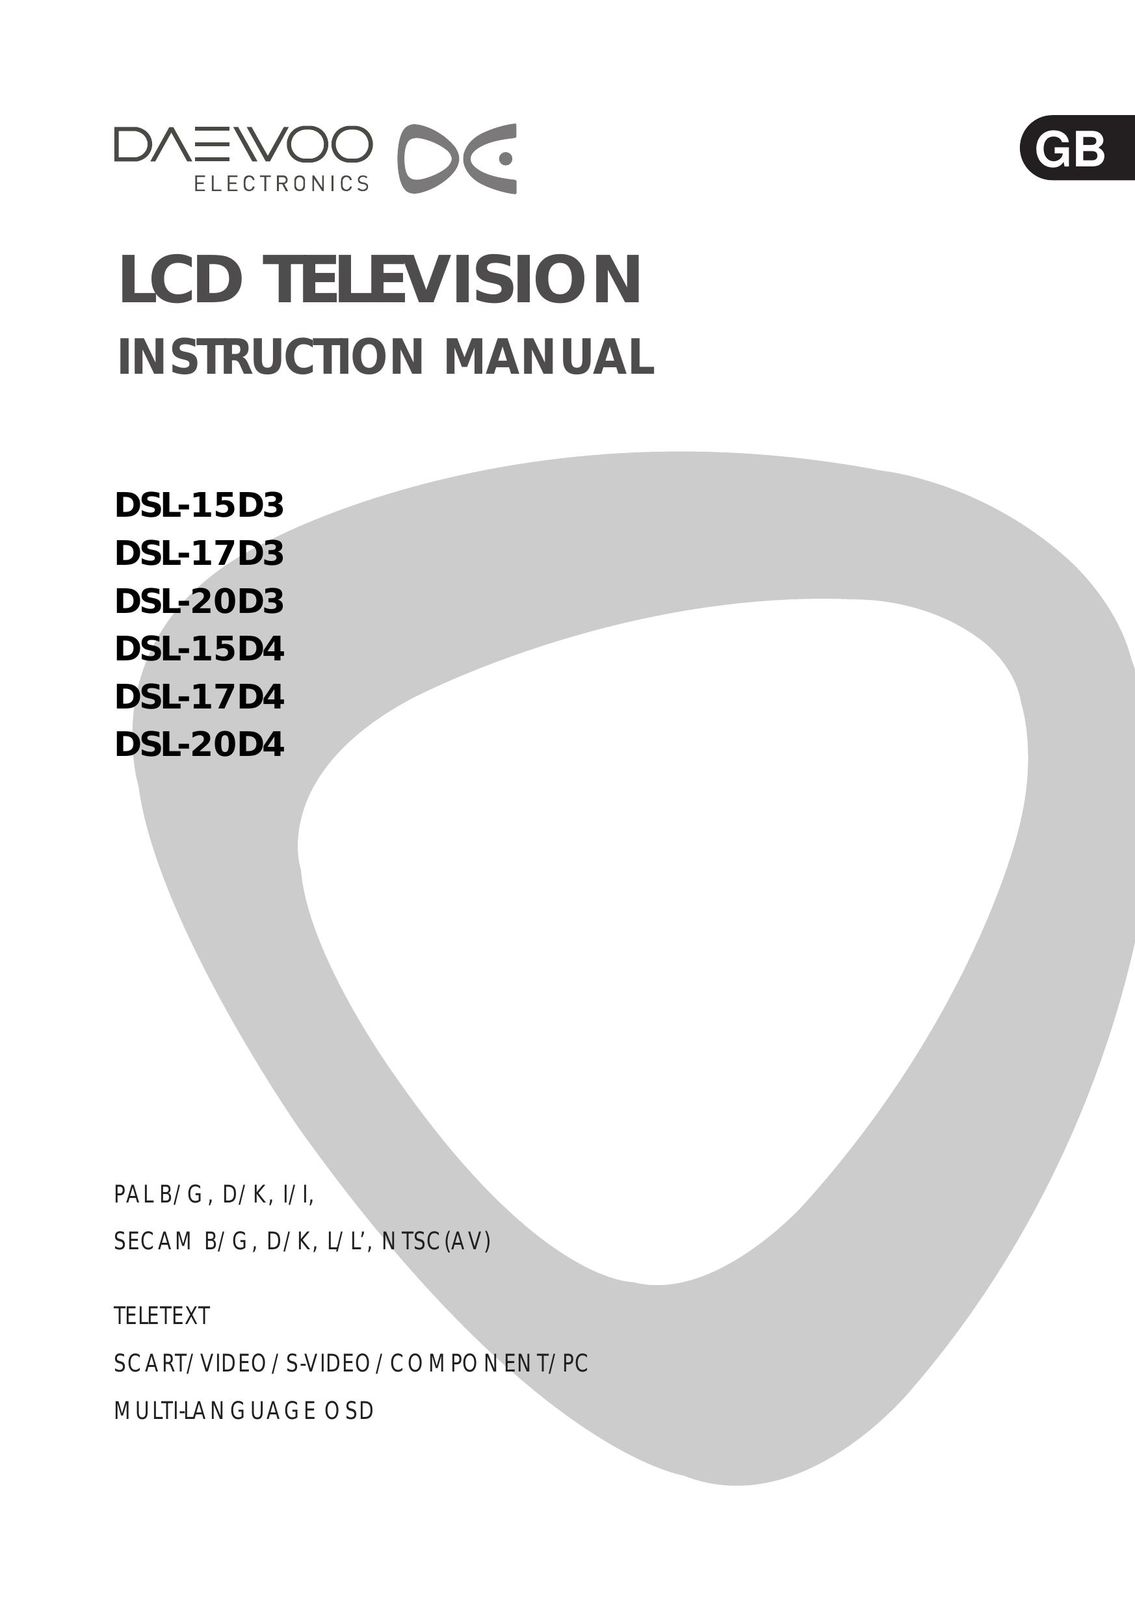 Daewoo DSL-17D4 Flat Panel Television User Manual